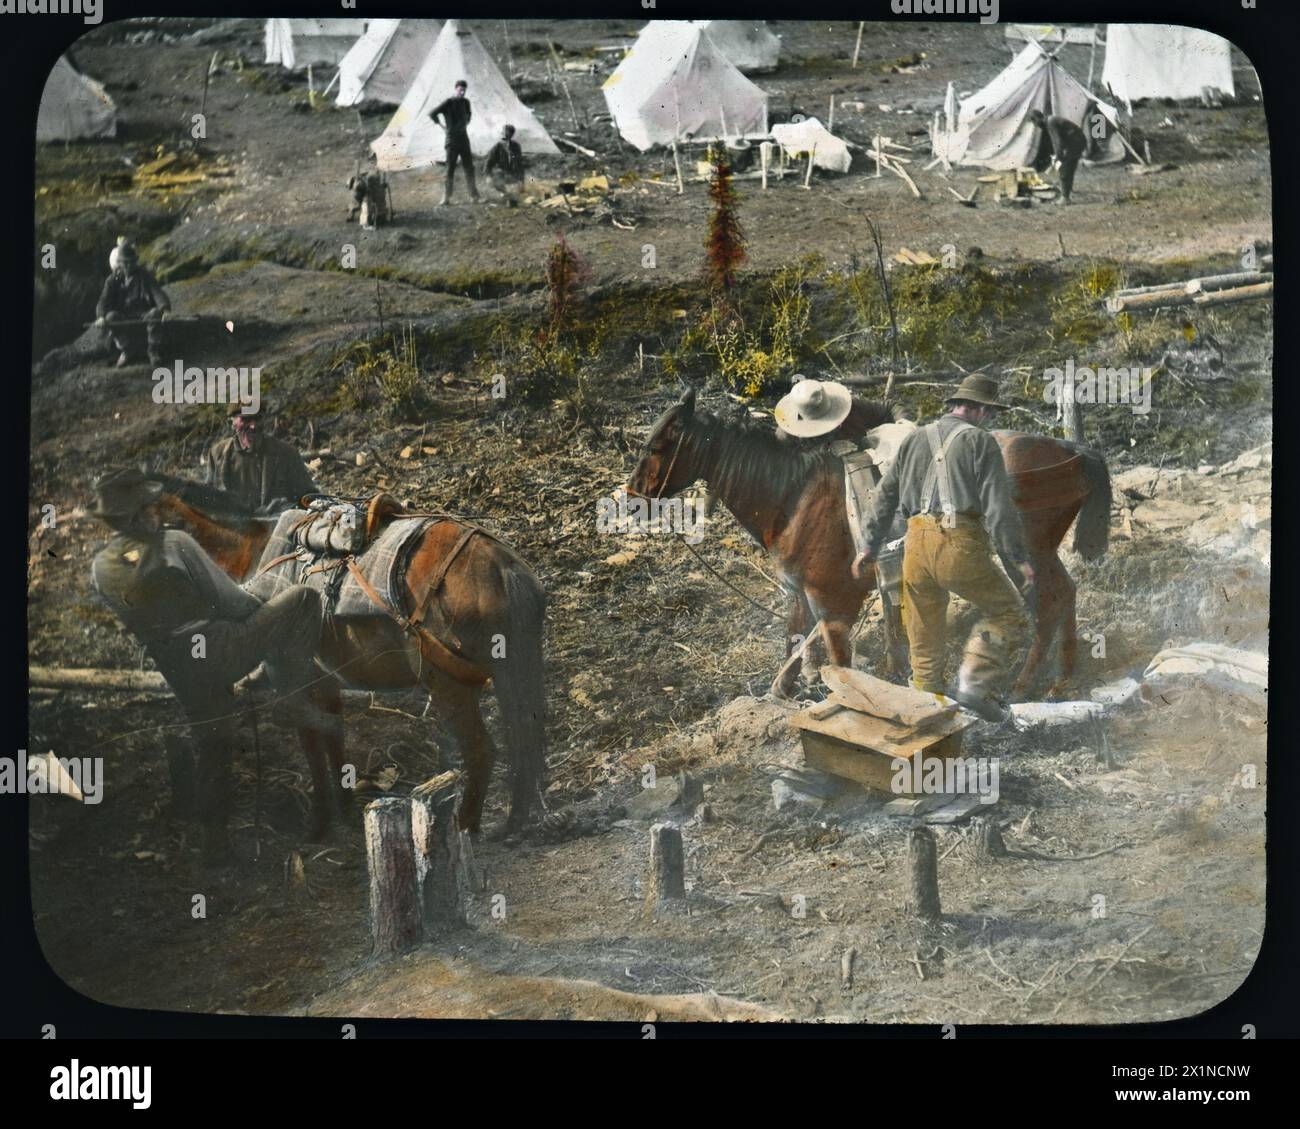 Loading gold onto pack horses, Bonanza, Yukon, 1898.  Vintage Canadian Gold Rush Photograph. Stock Photo